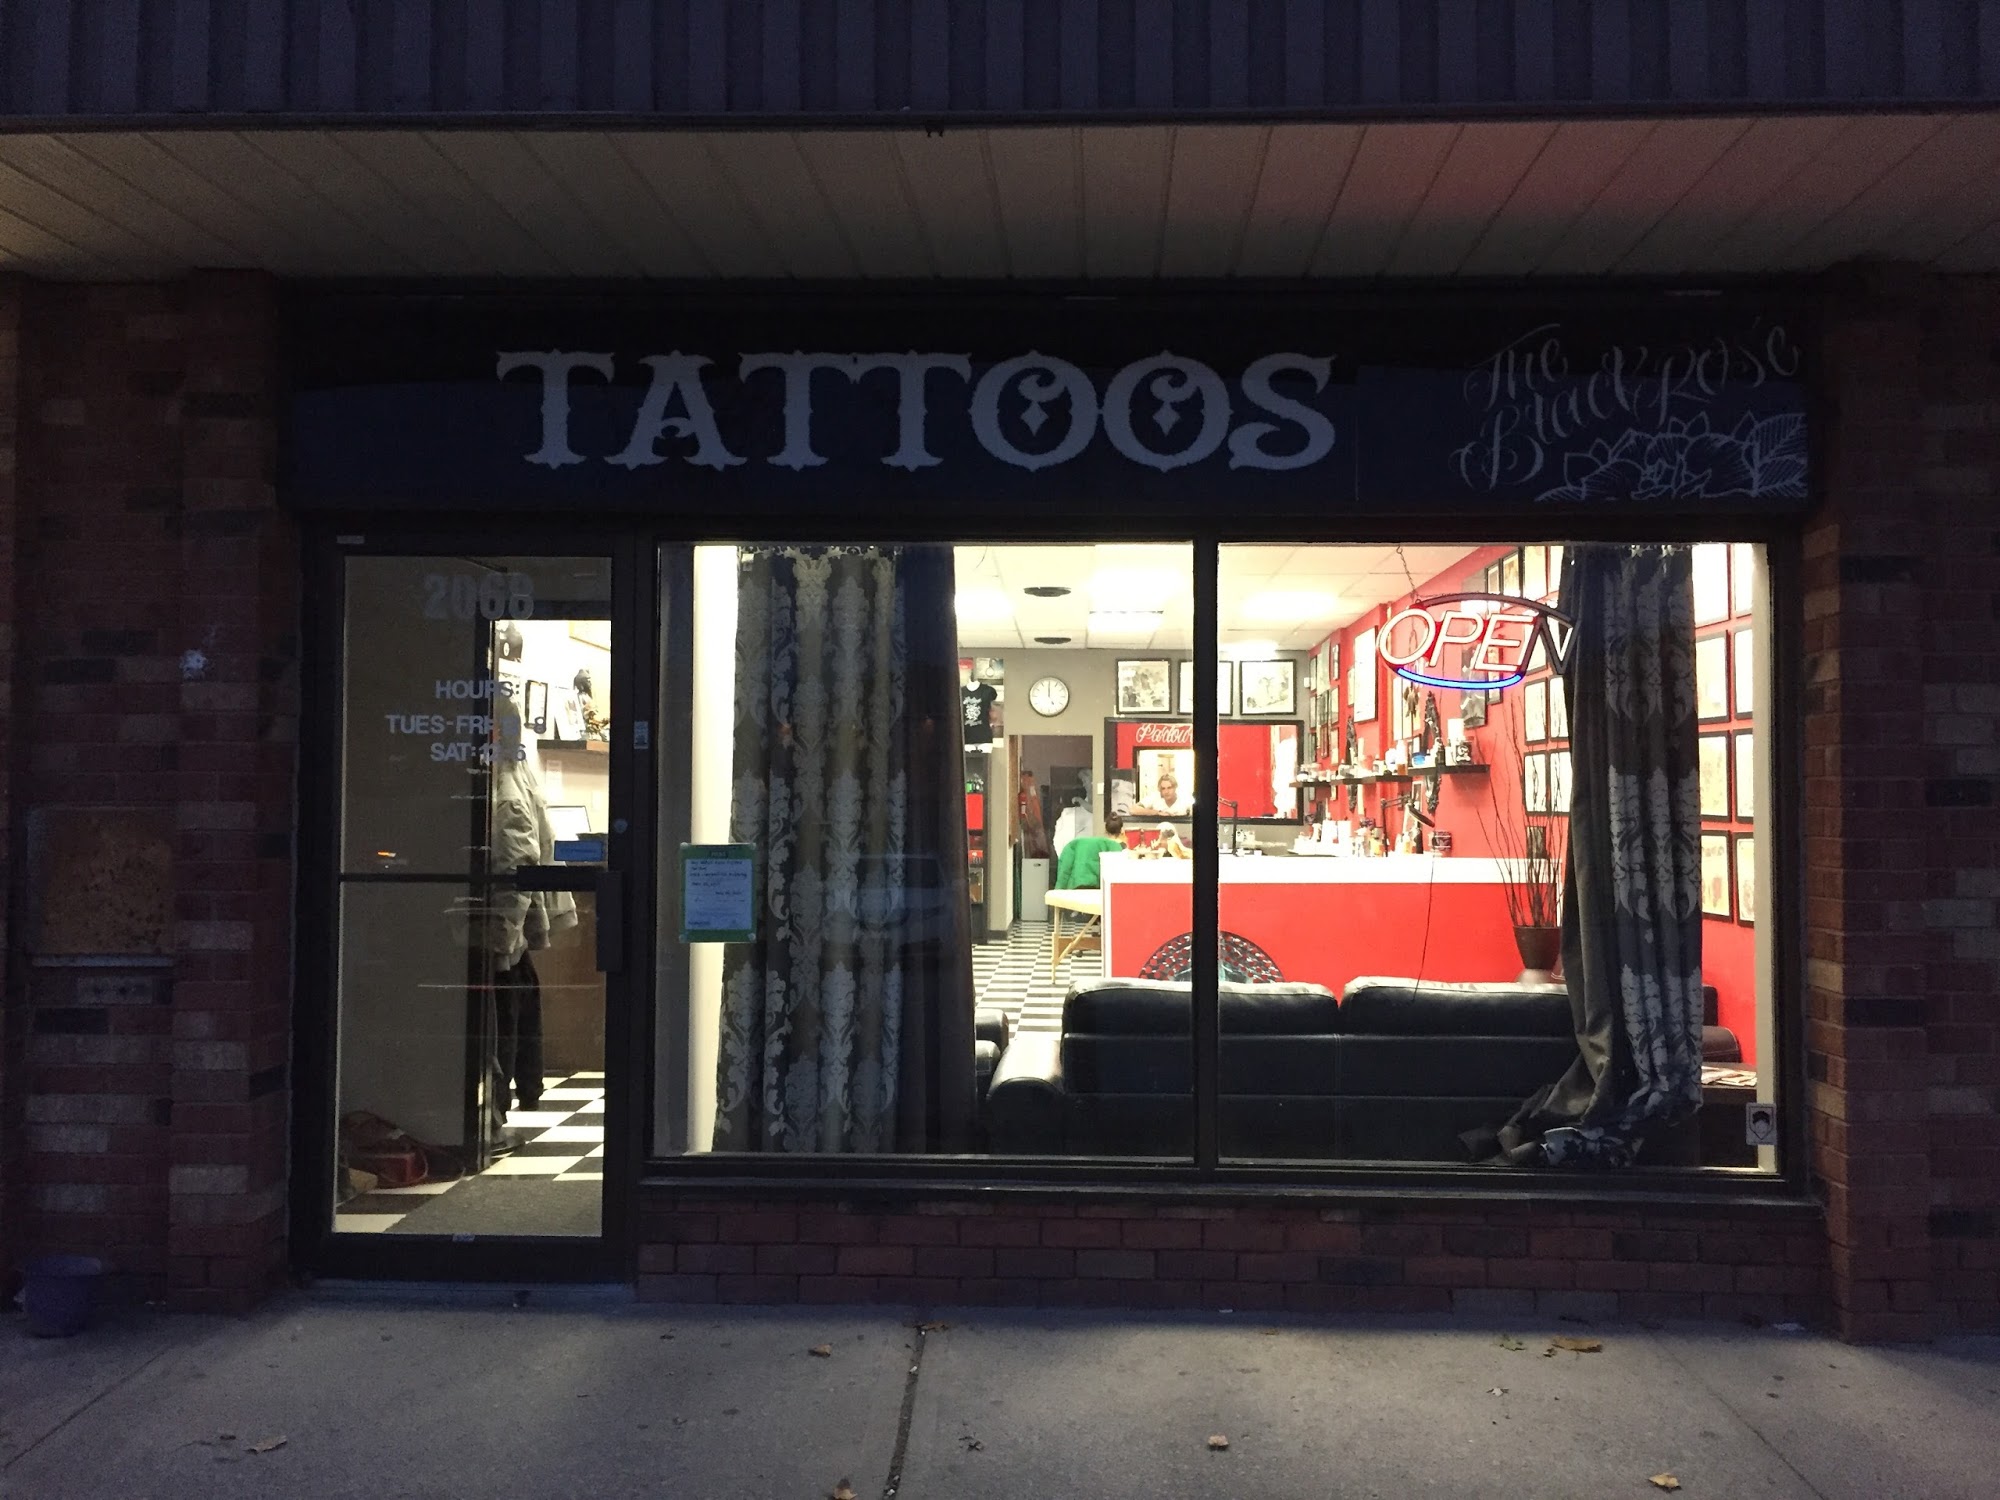 The Black Rose Tattoo Parlour